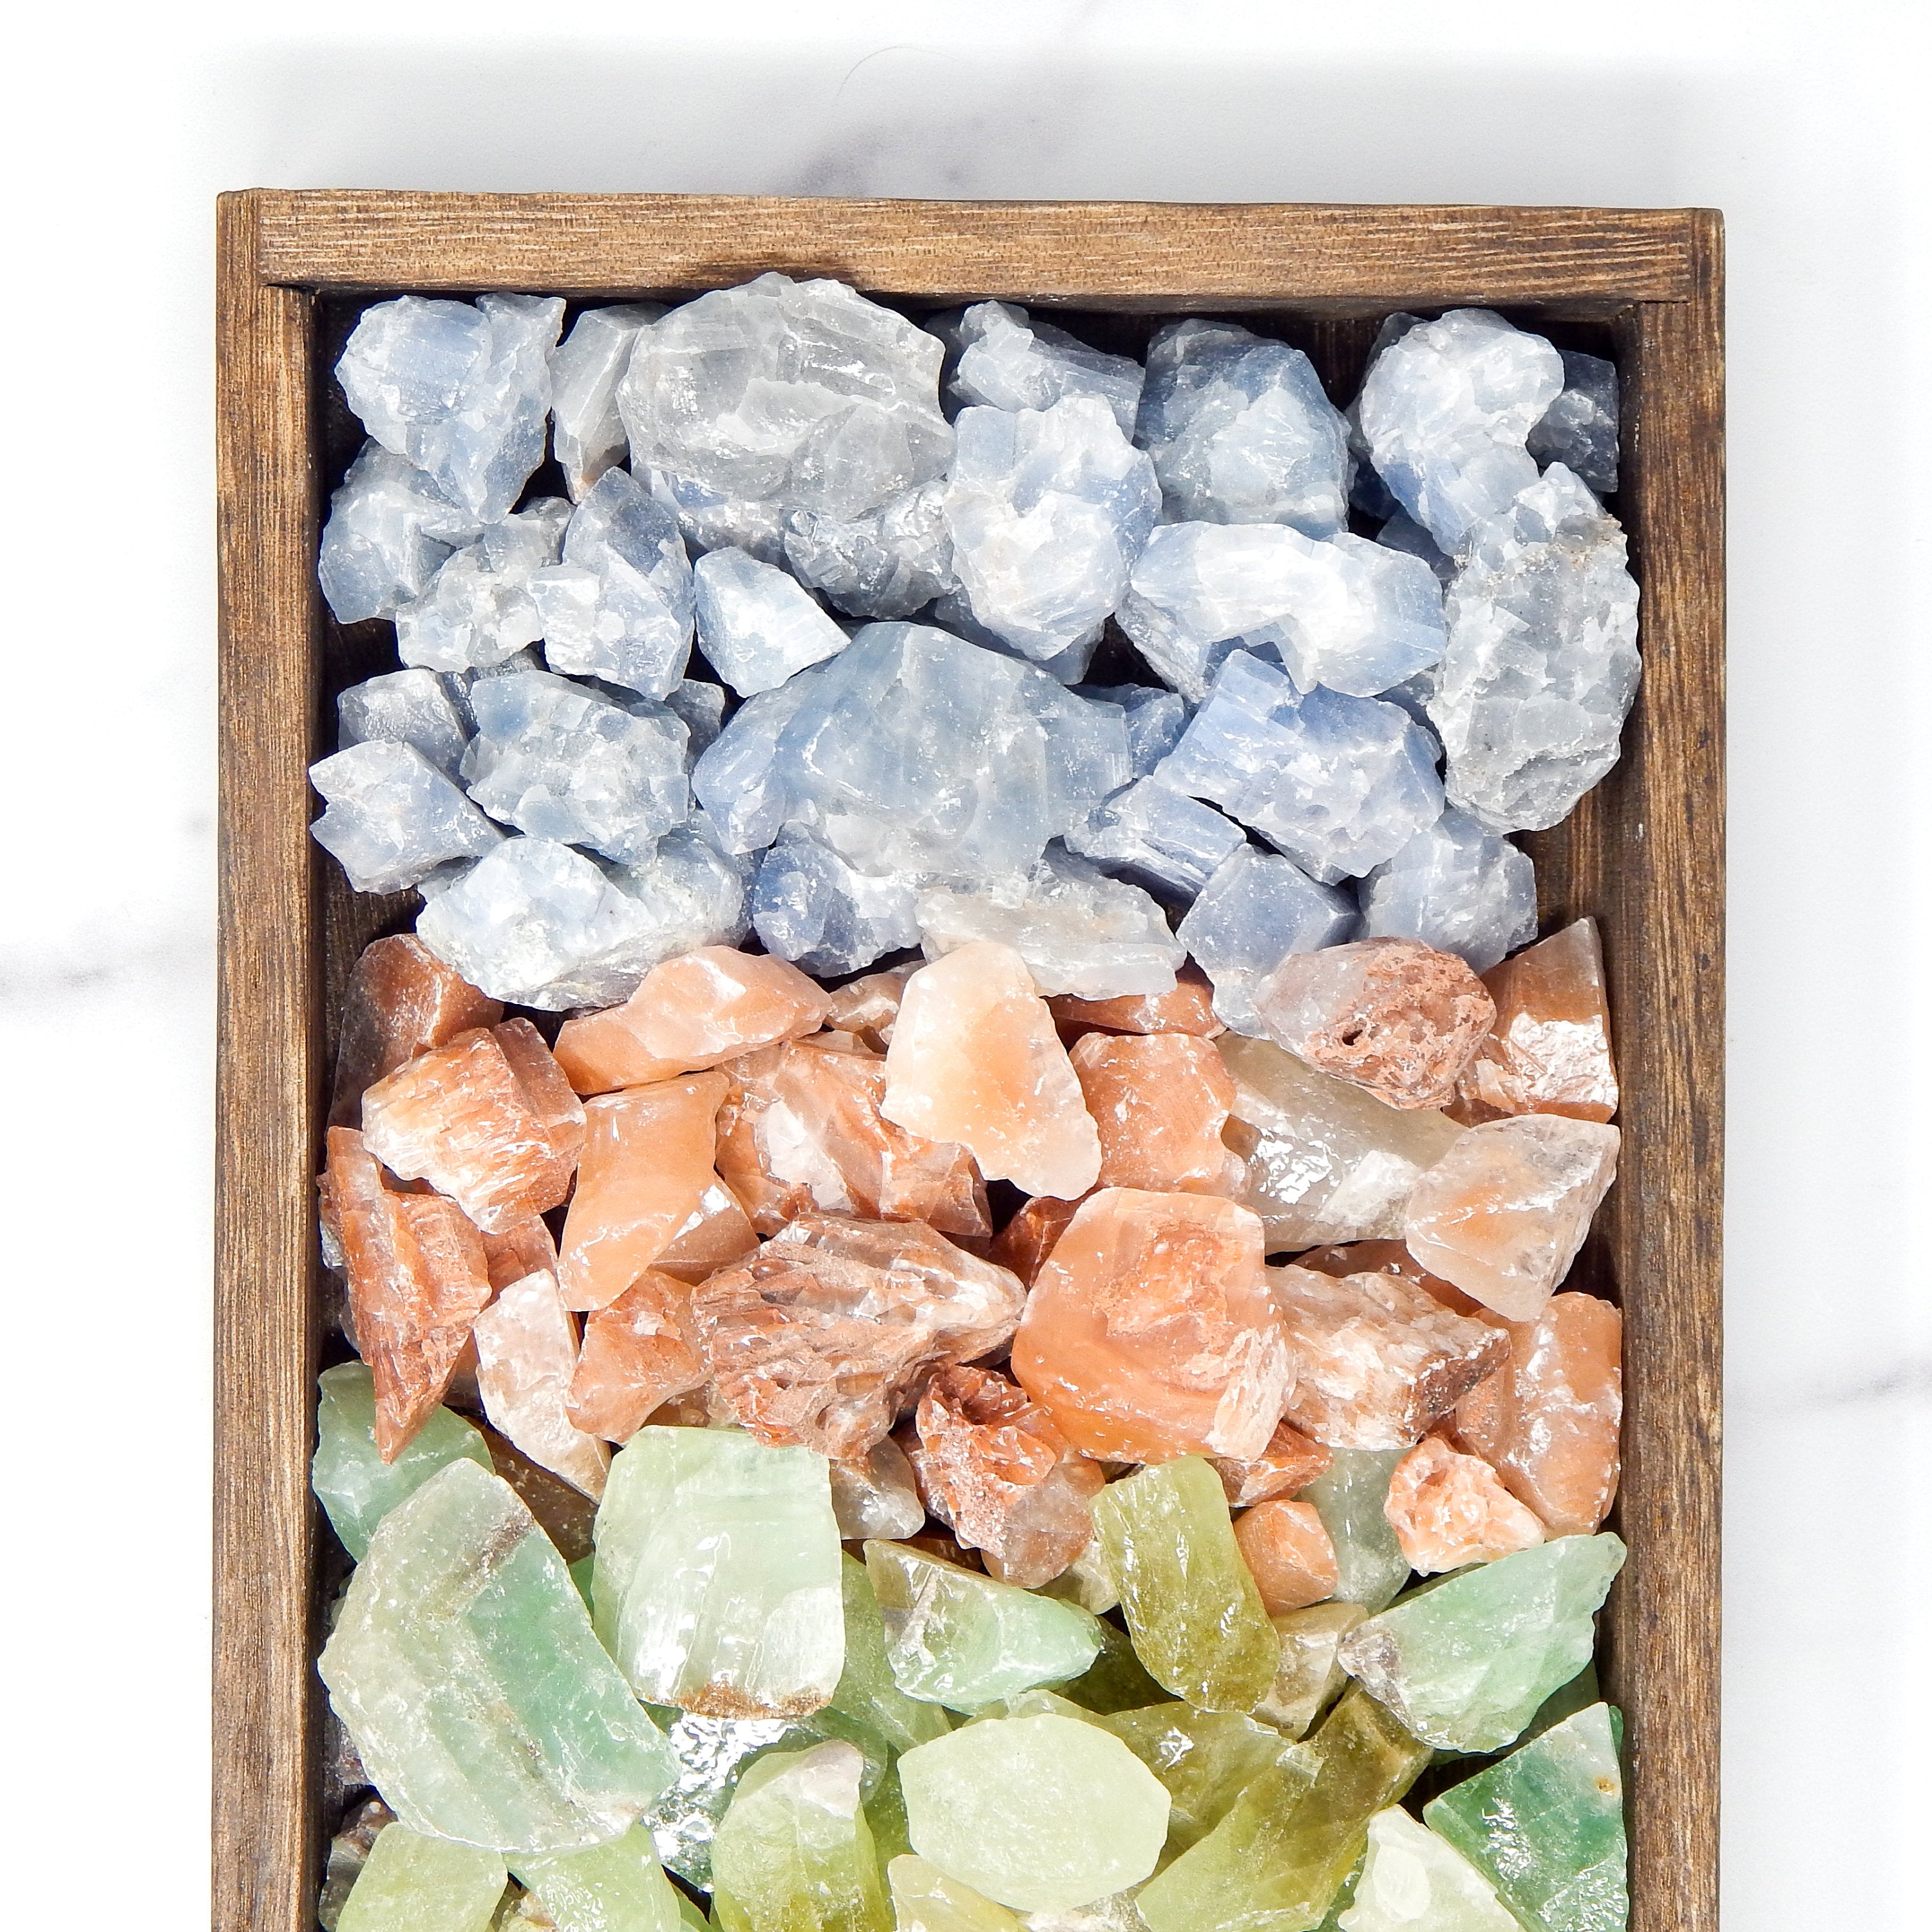 Calcite Crystal Healing Set